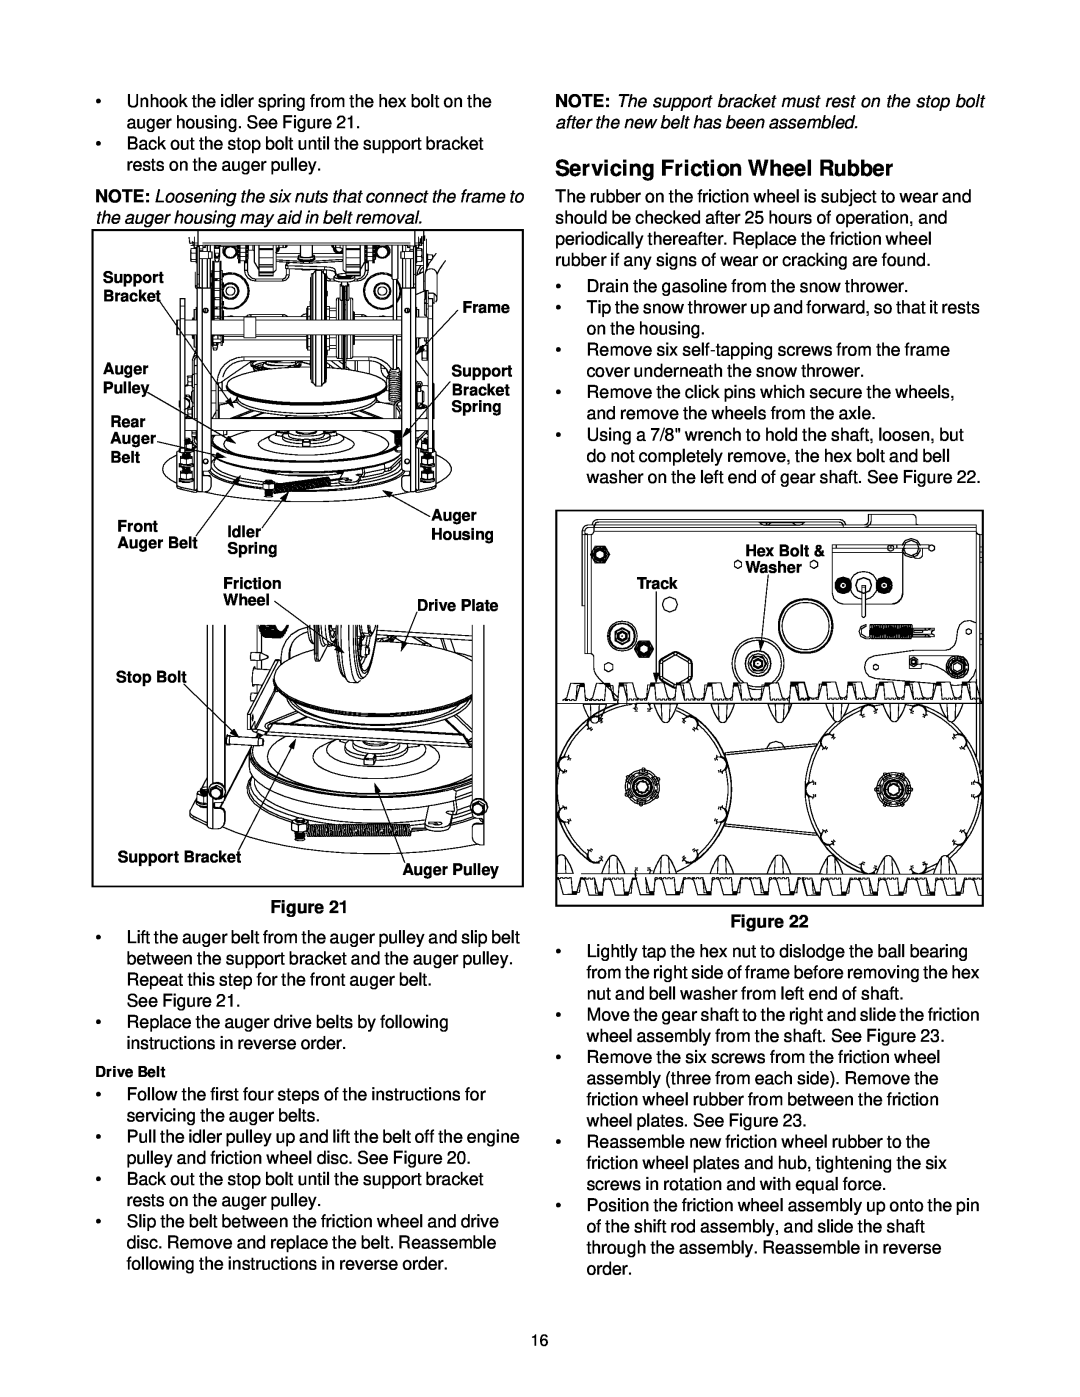 MTD E740F manual Servicing Friction Wheel Rubber, Drive Belt 